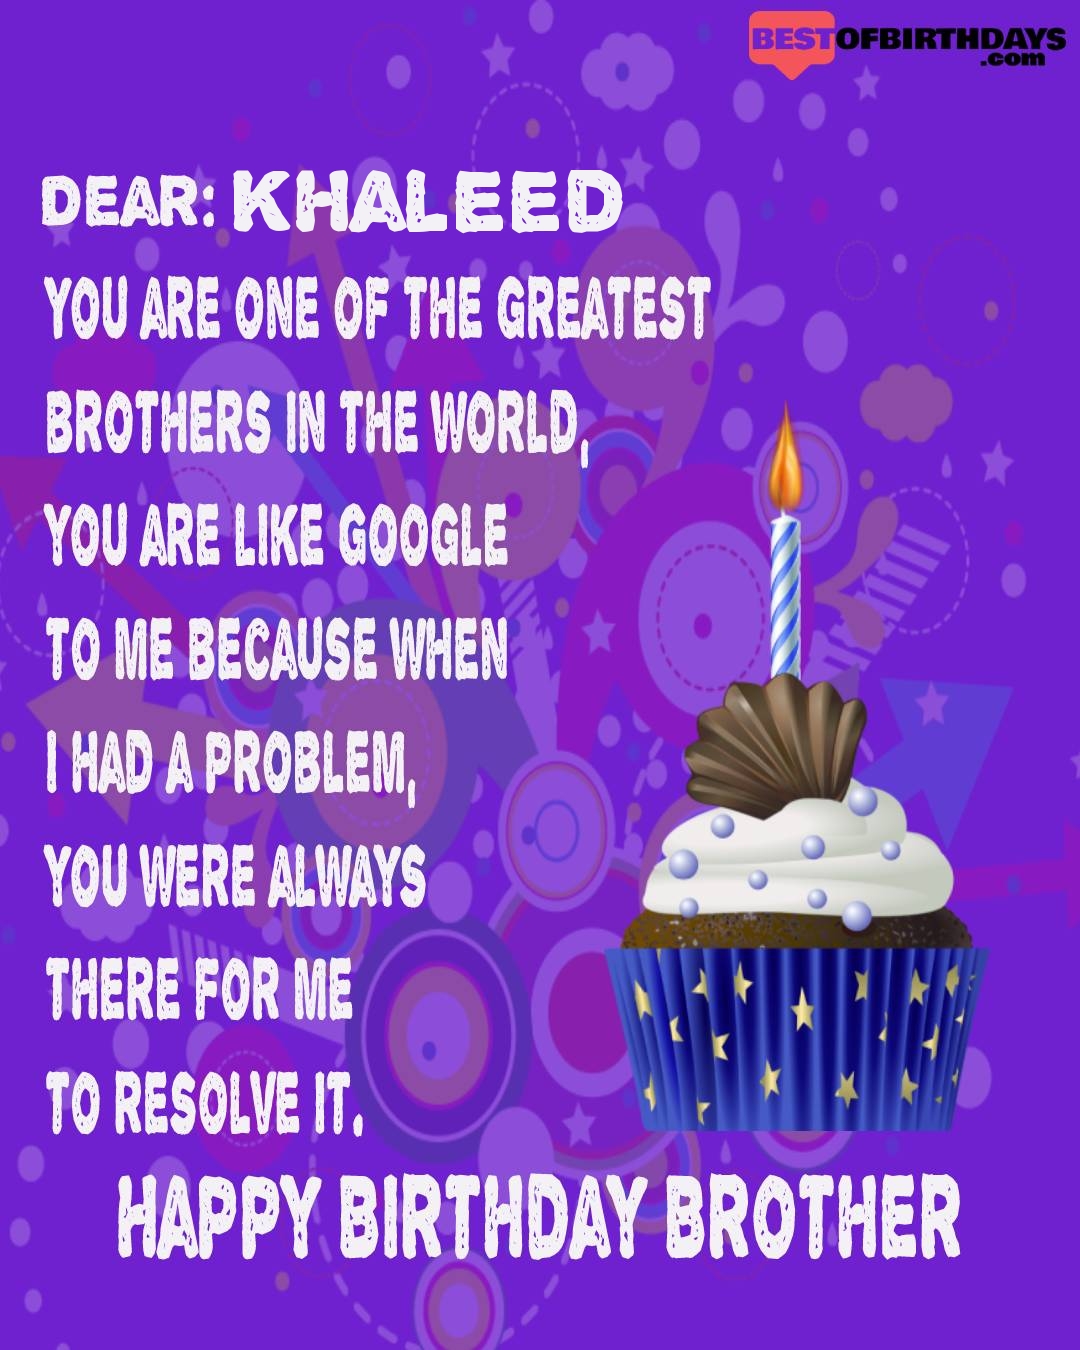 Happy birthday khaleed bhai brother bro